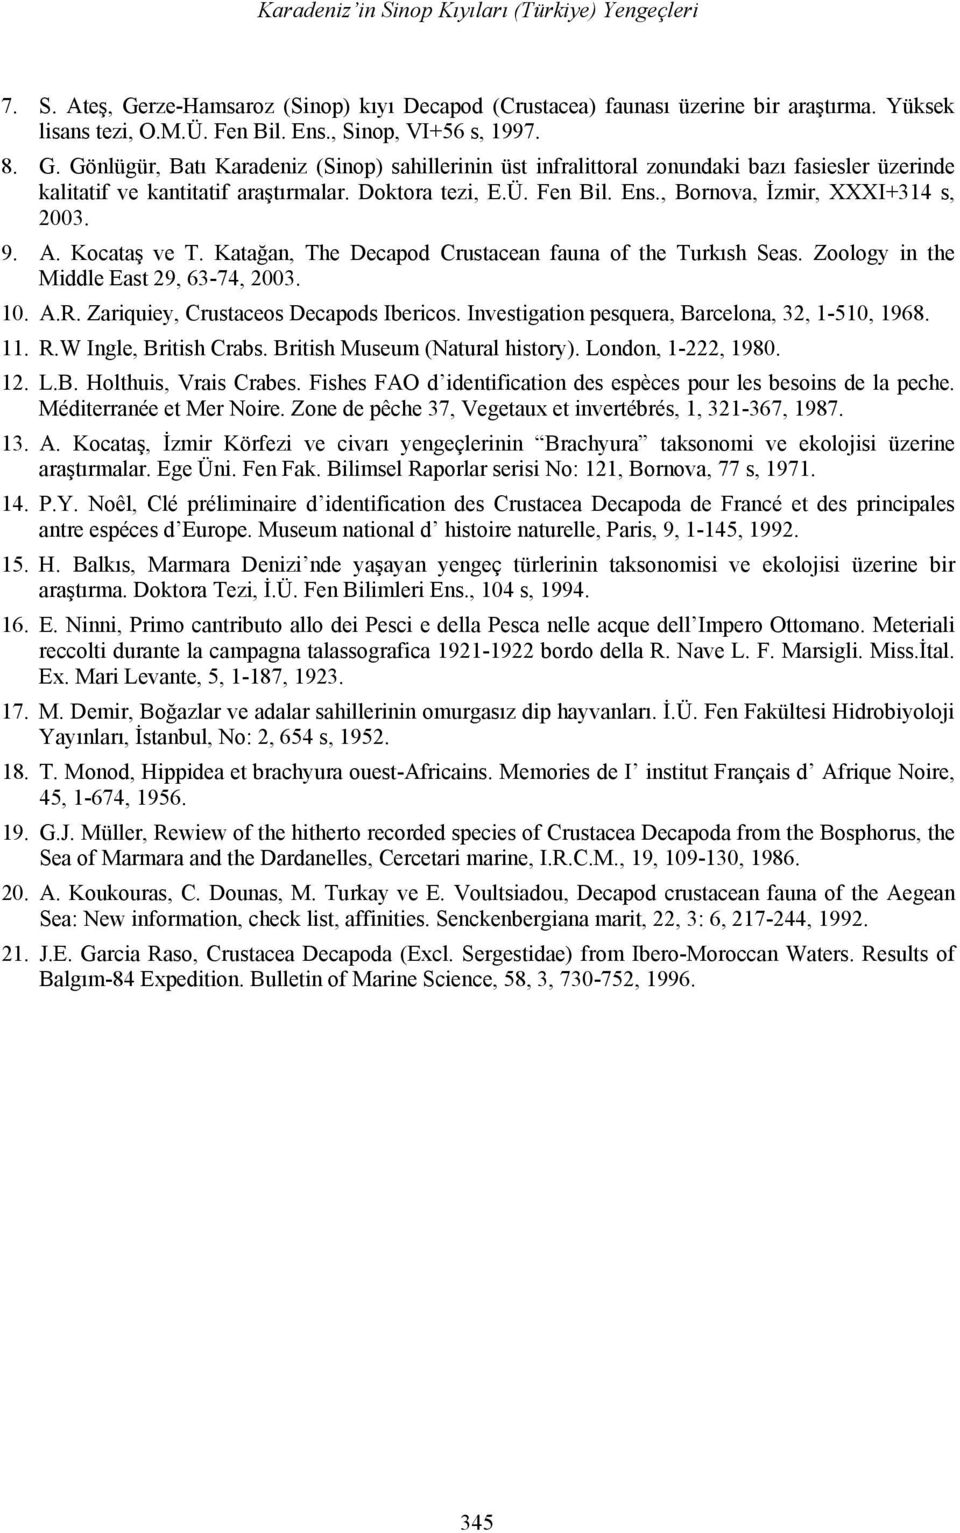 , Bornova, İzmir, XXXI+314 s, 2003. 9. A. Kocataş ve T. Katağan, The Decapod Crustacean fauna of the Turkısh Seas. Zoology in the Middle East 29, 63-74, 2003. 10. A.R.